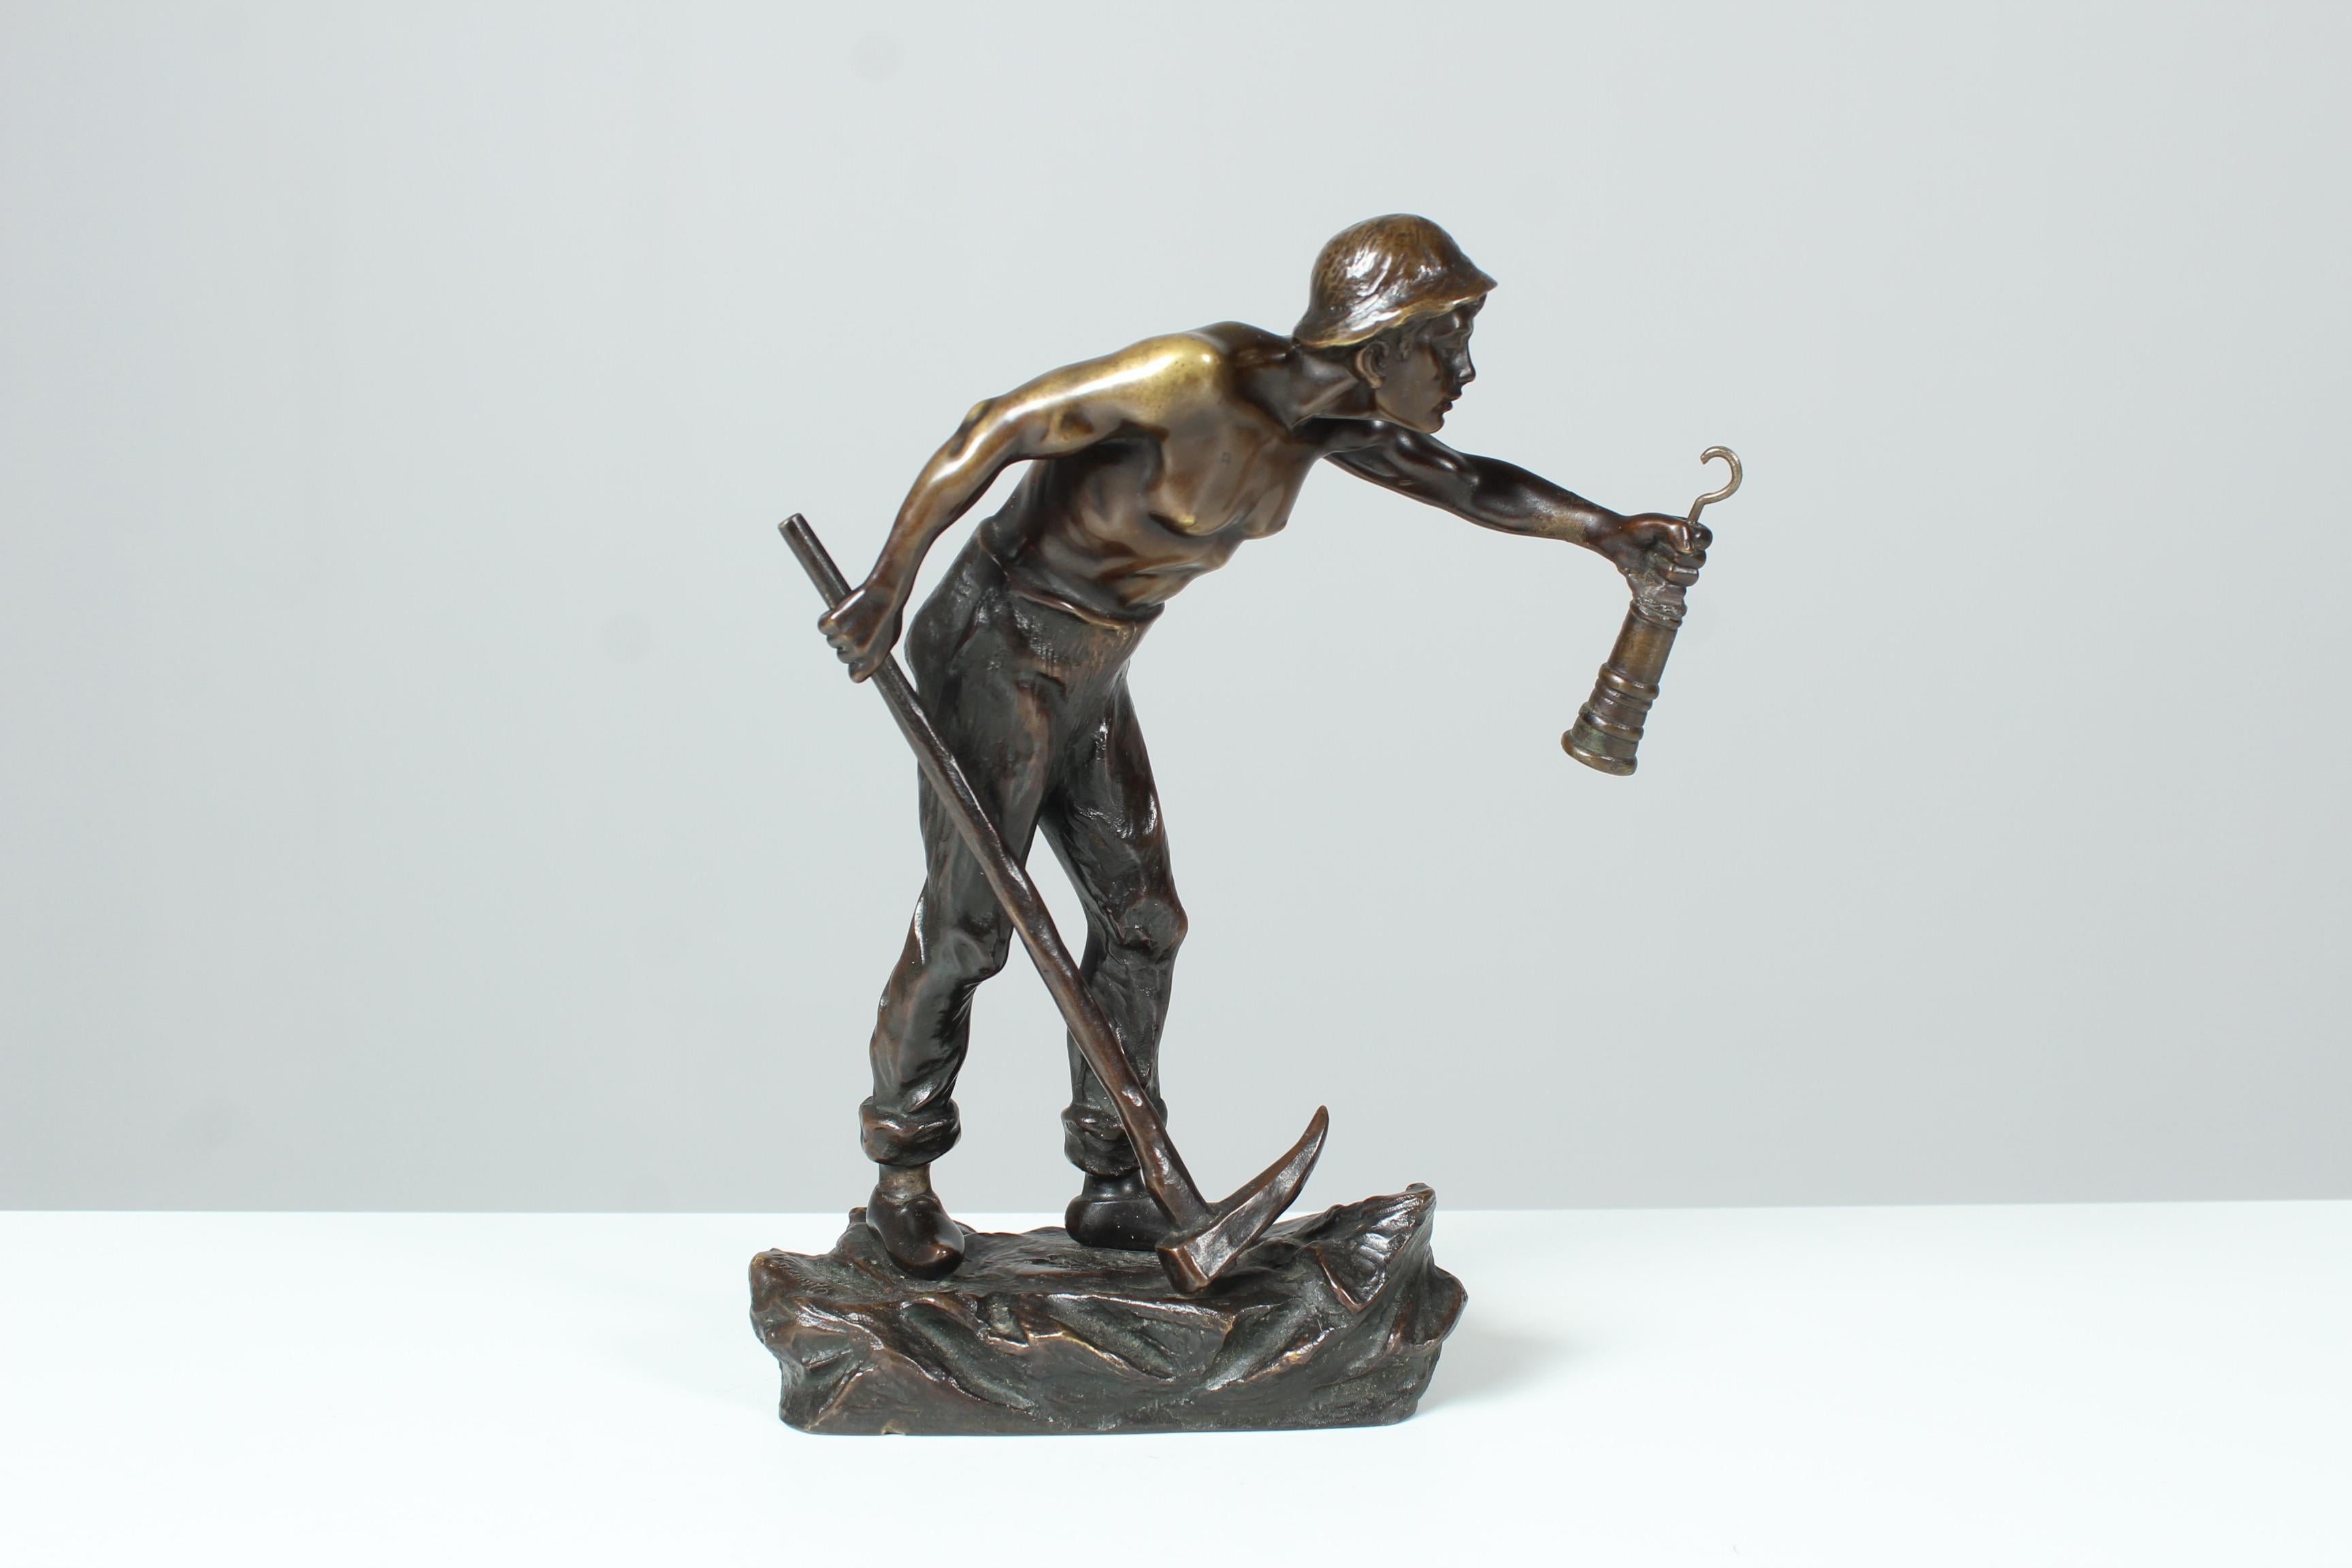 Signed bronze work by the german sculptor Wilhelm Warmuth: 